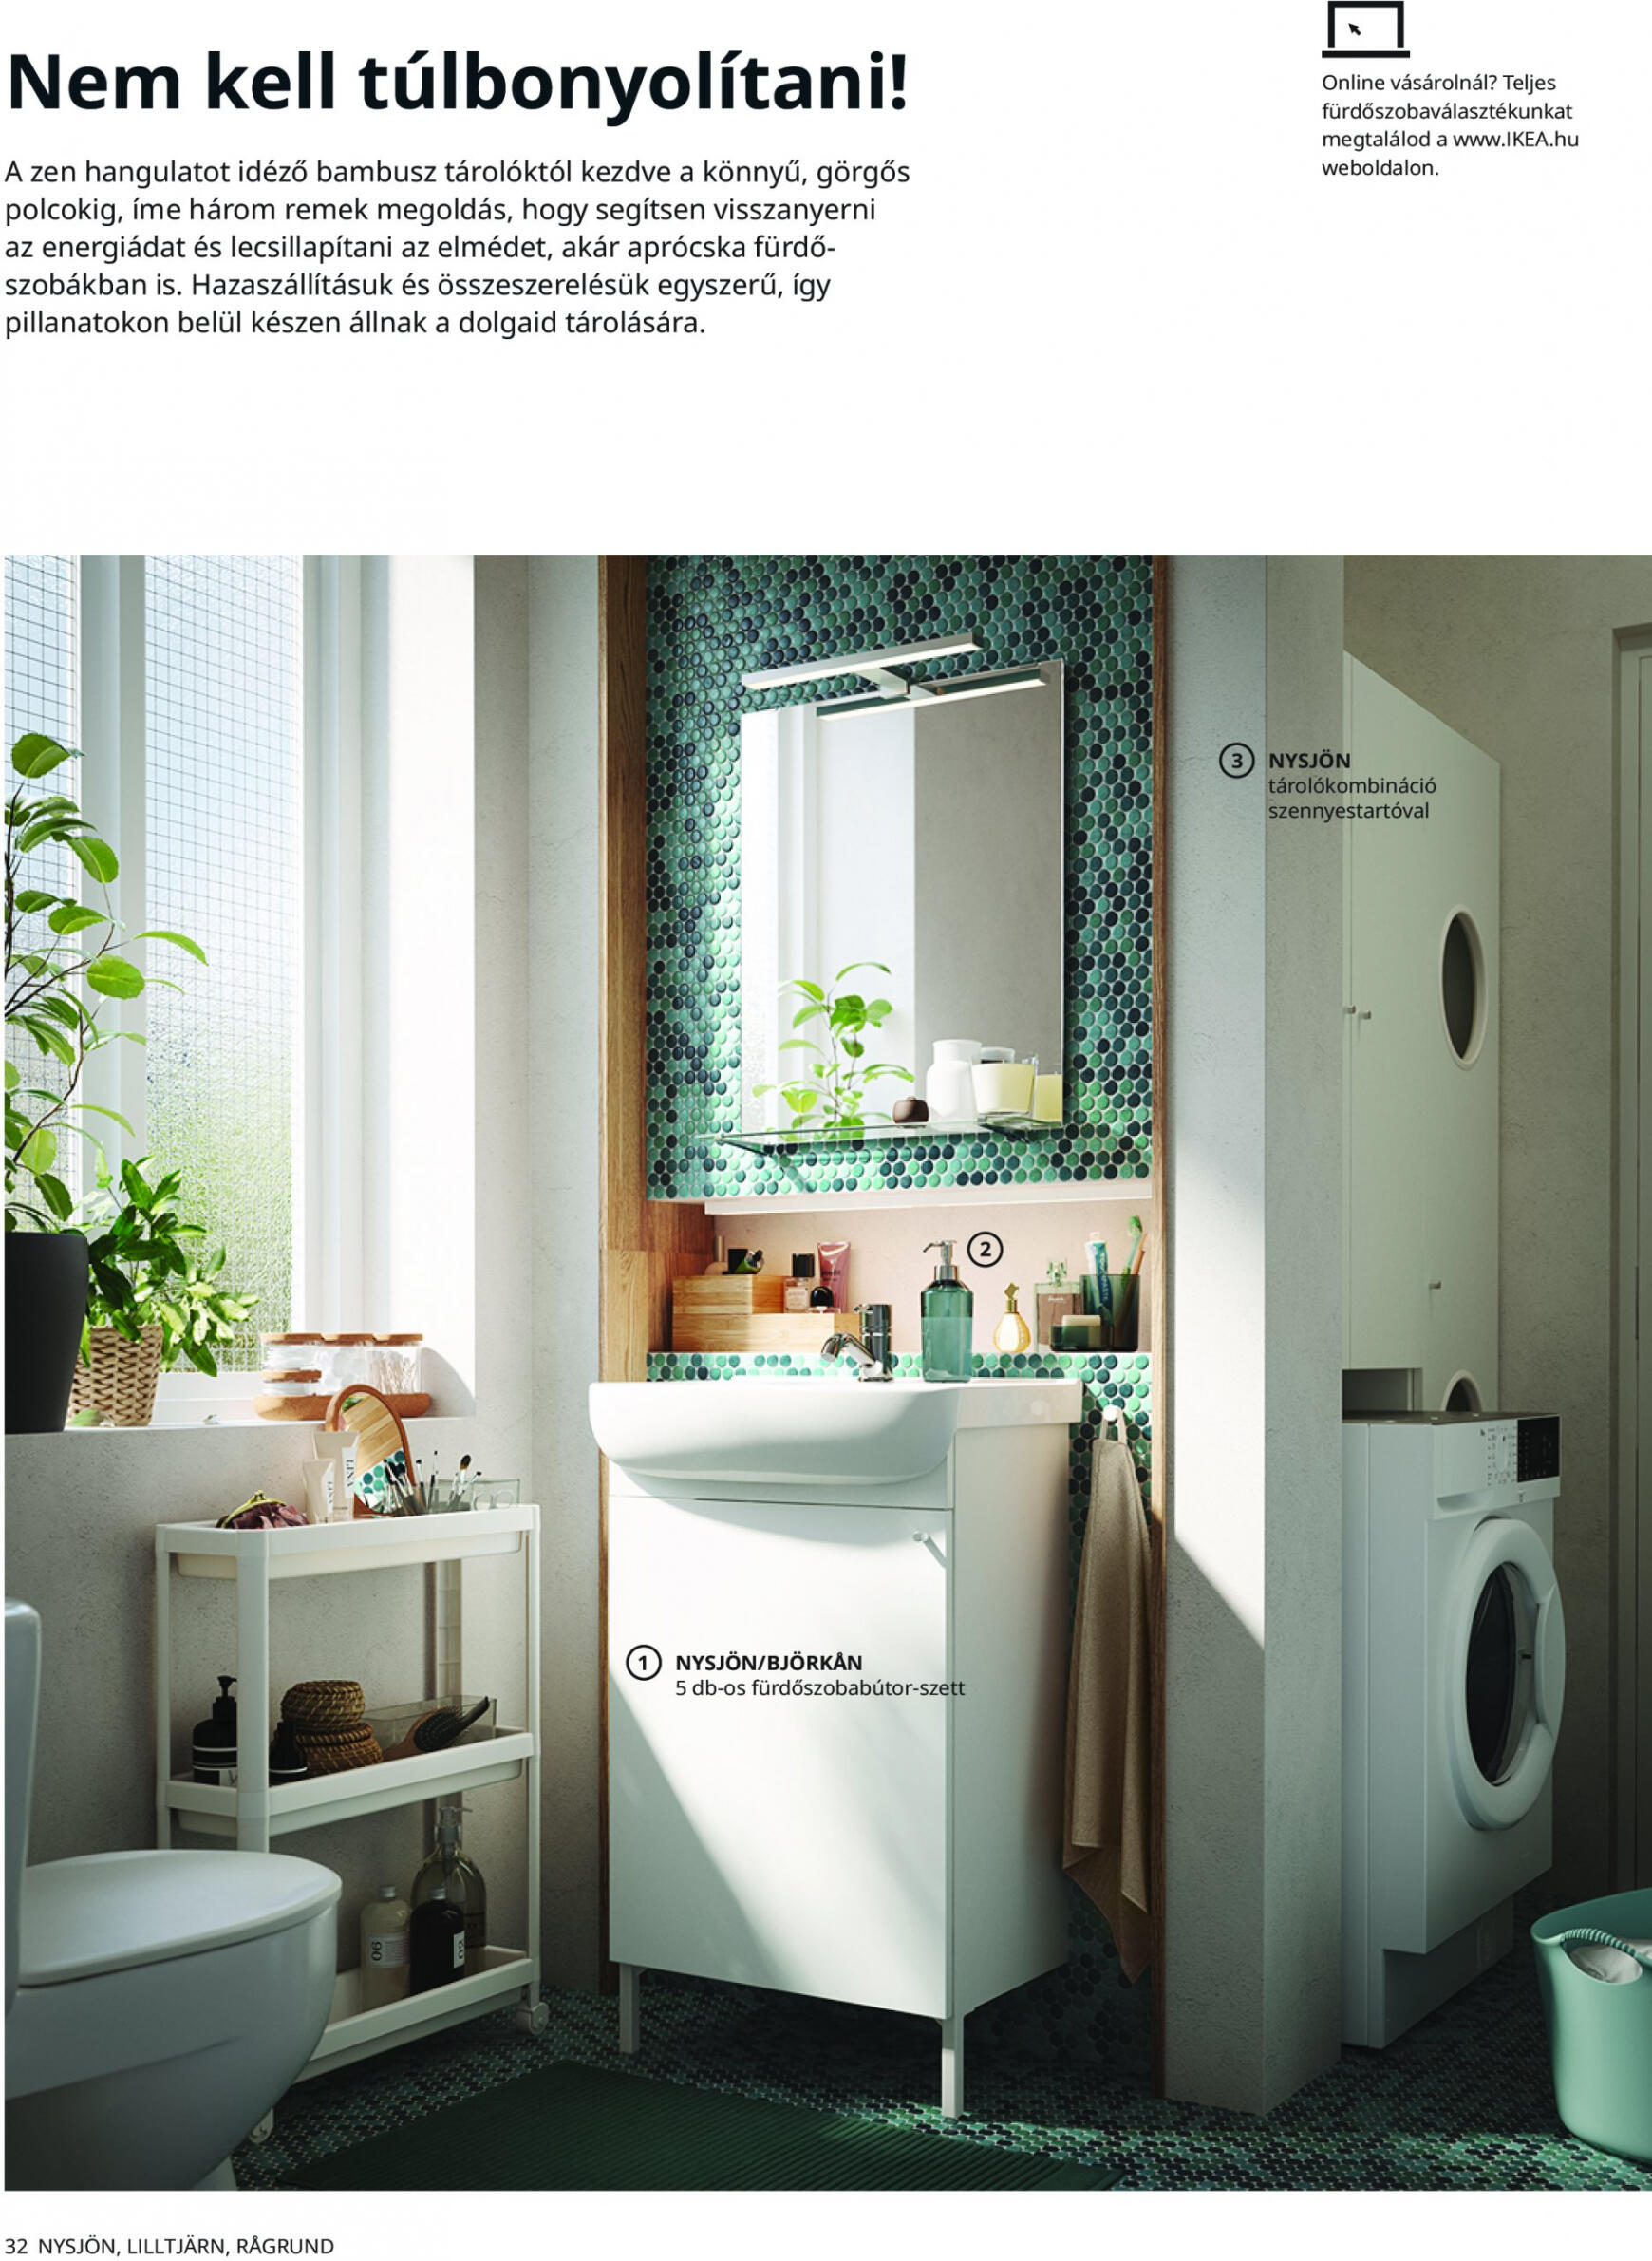 ikea - IKEA újság hétfőtől 09.26. - page: 32